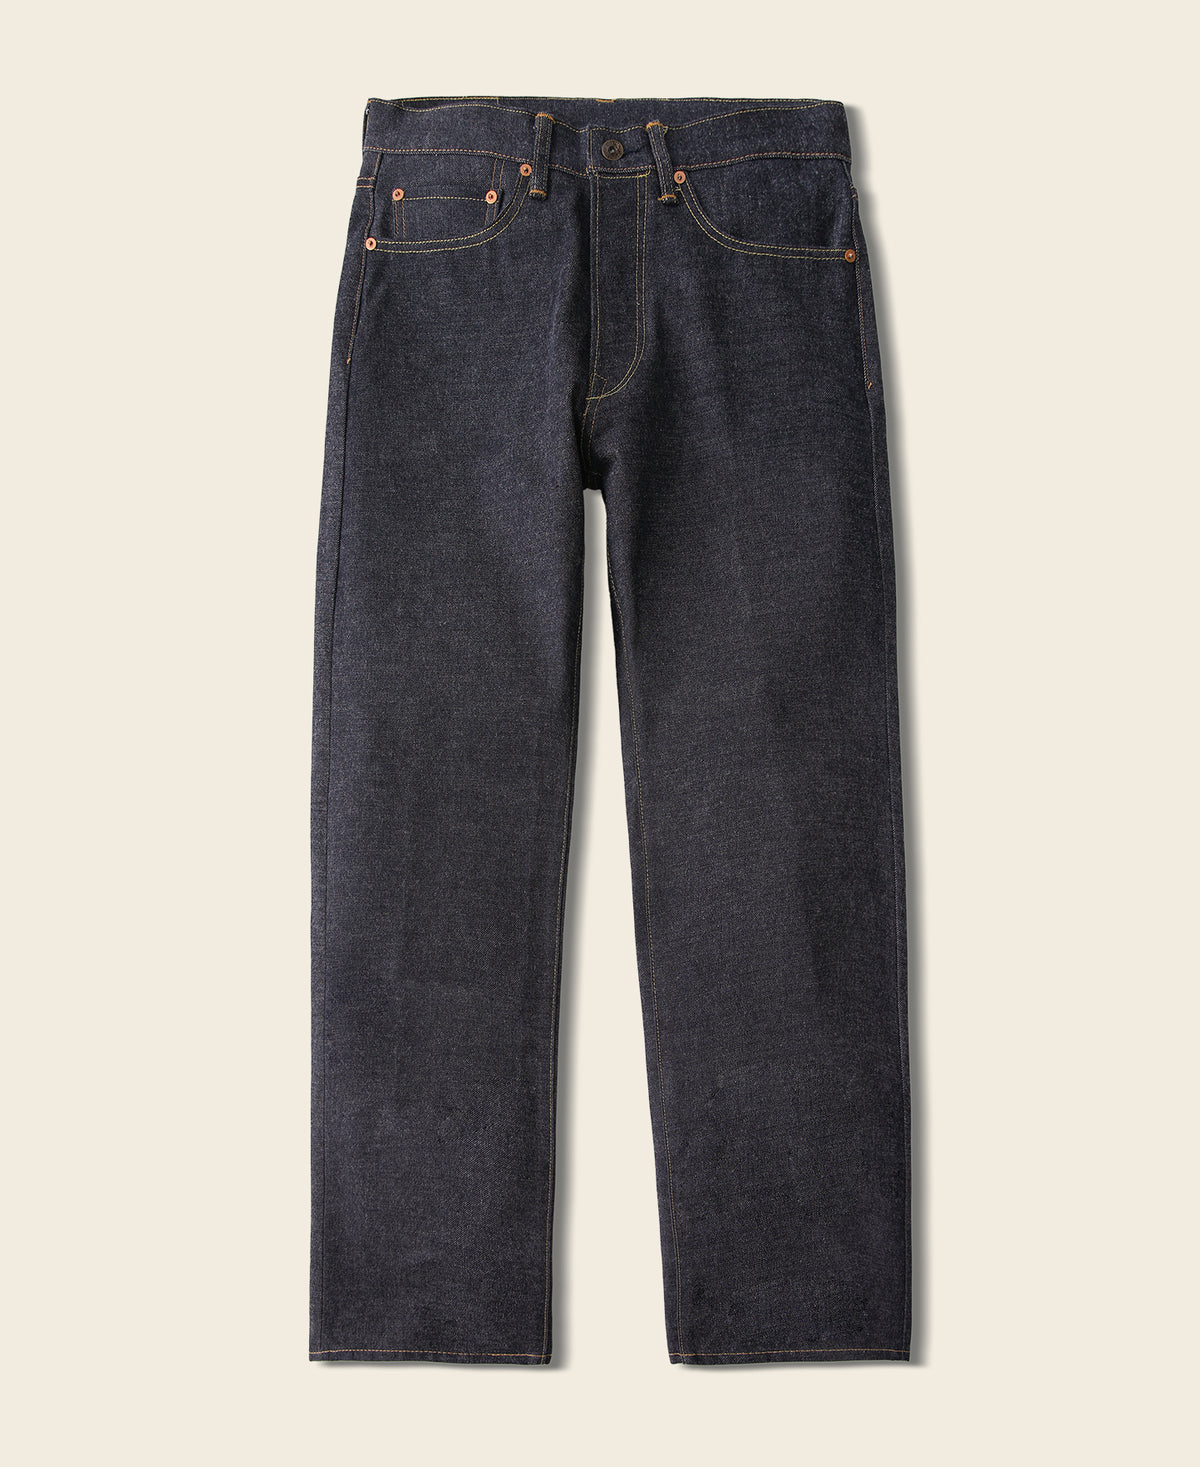 15 oz Heavyweight Selvedge Denim Jeans